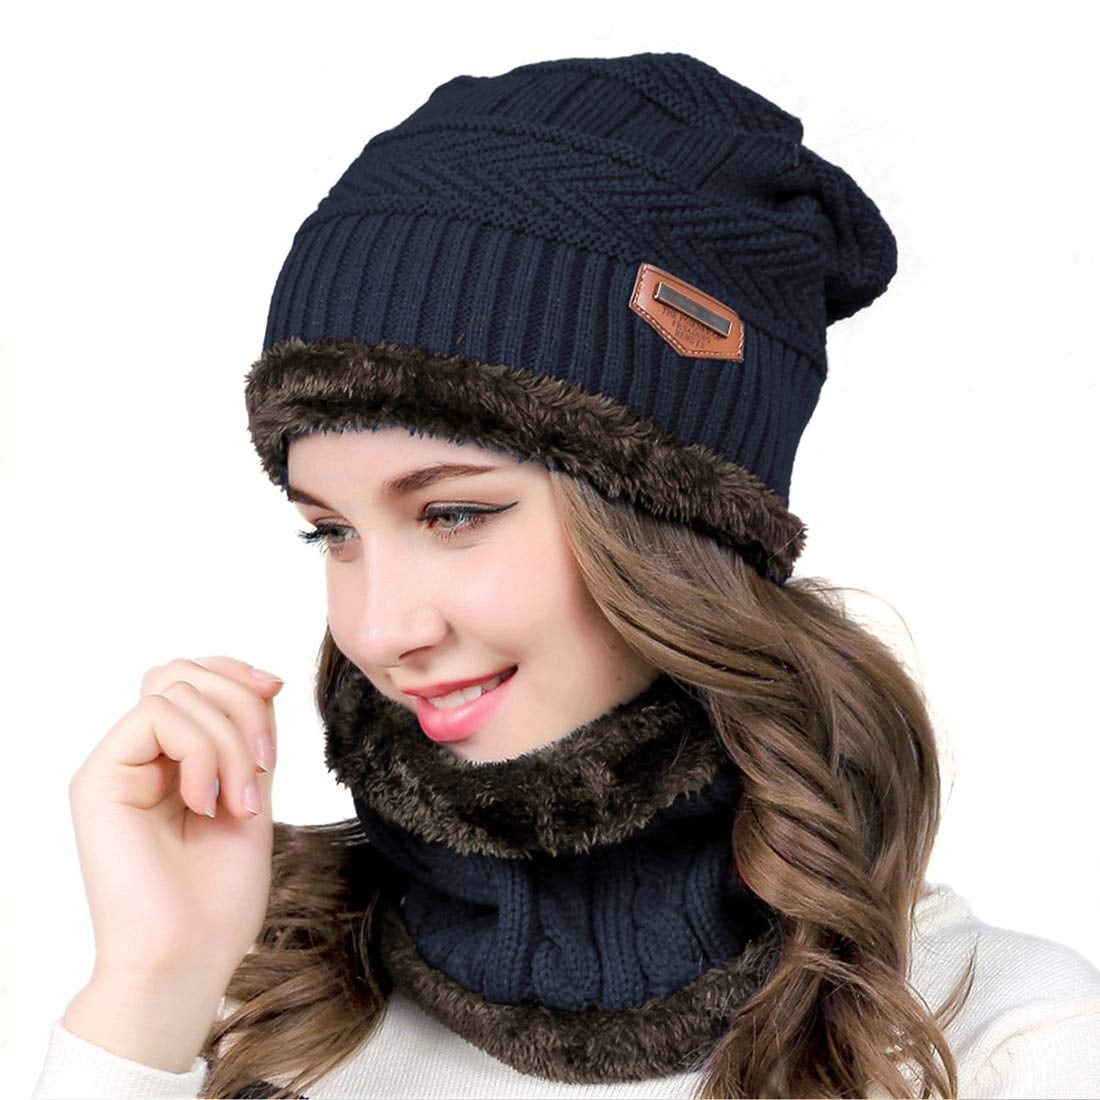 Ilfioreemio Beanie Hats for Men Women - Black Winter Stocking Cap Thick ...